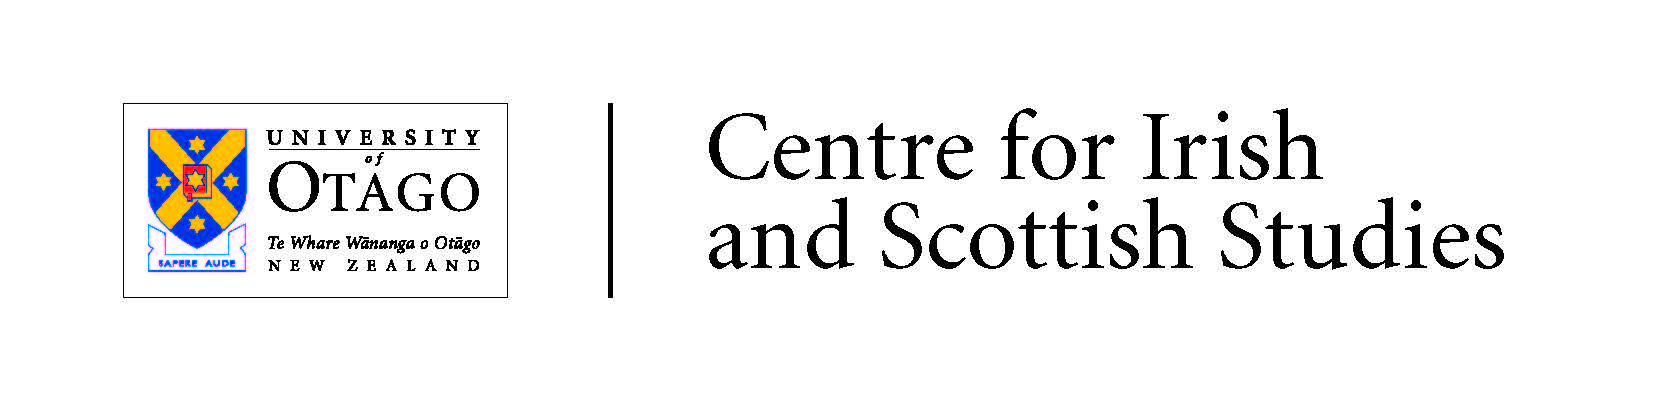 Centre for Irish and Scottish Studies